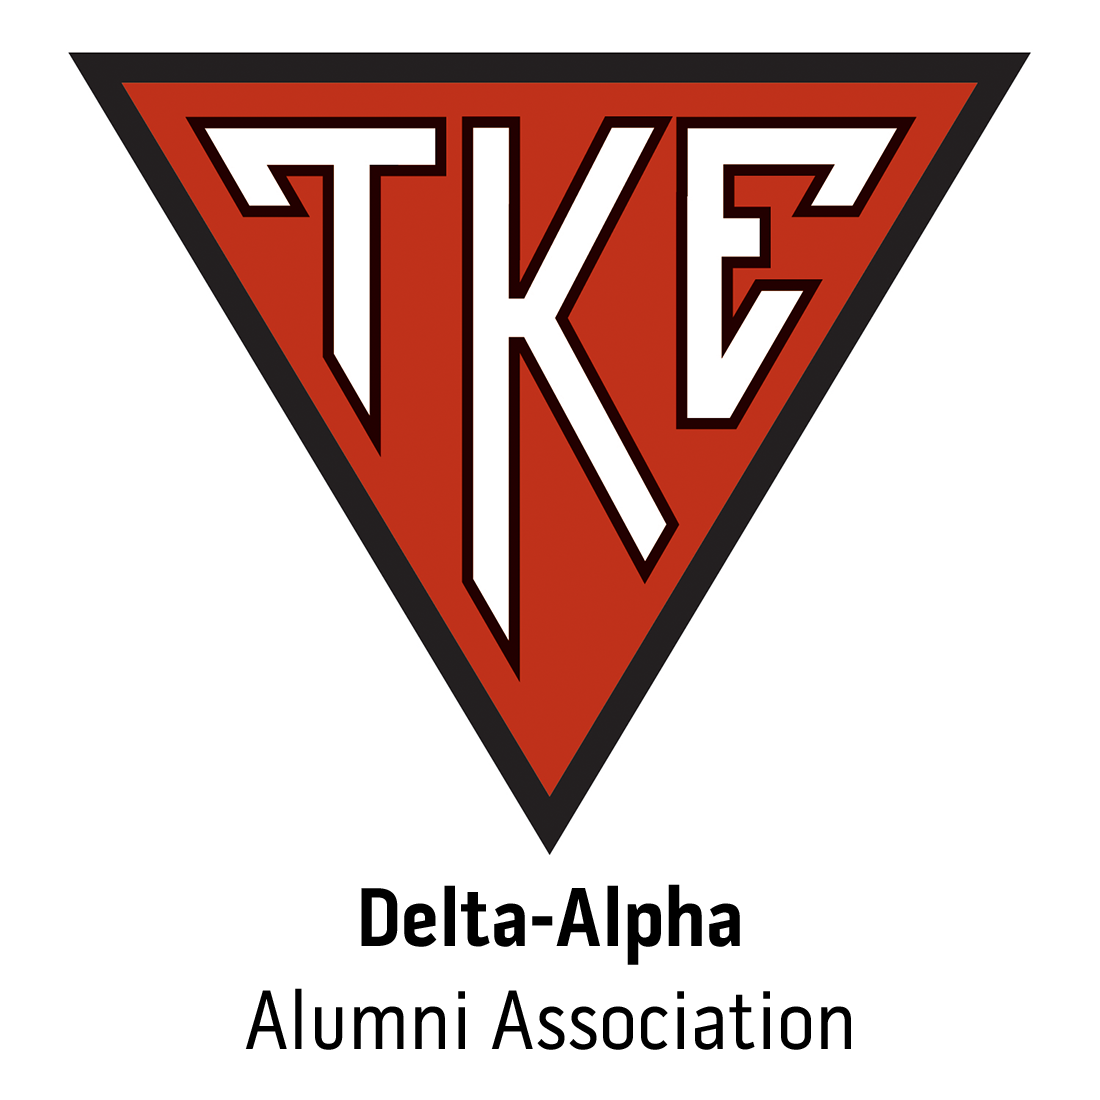 Delta-Alpha Alumni Association for Western Michigan University